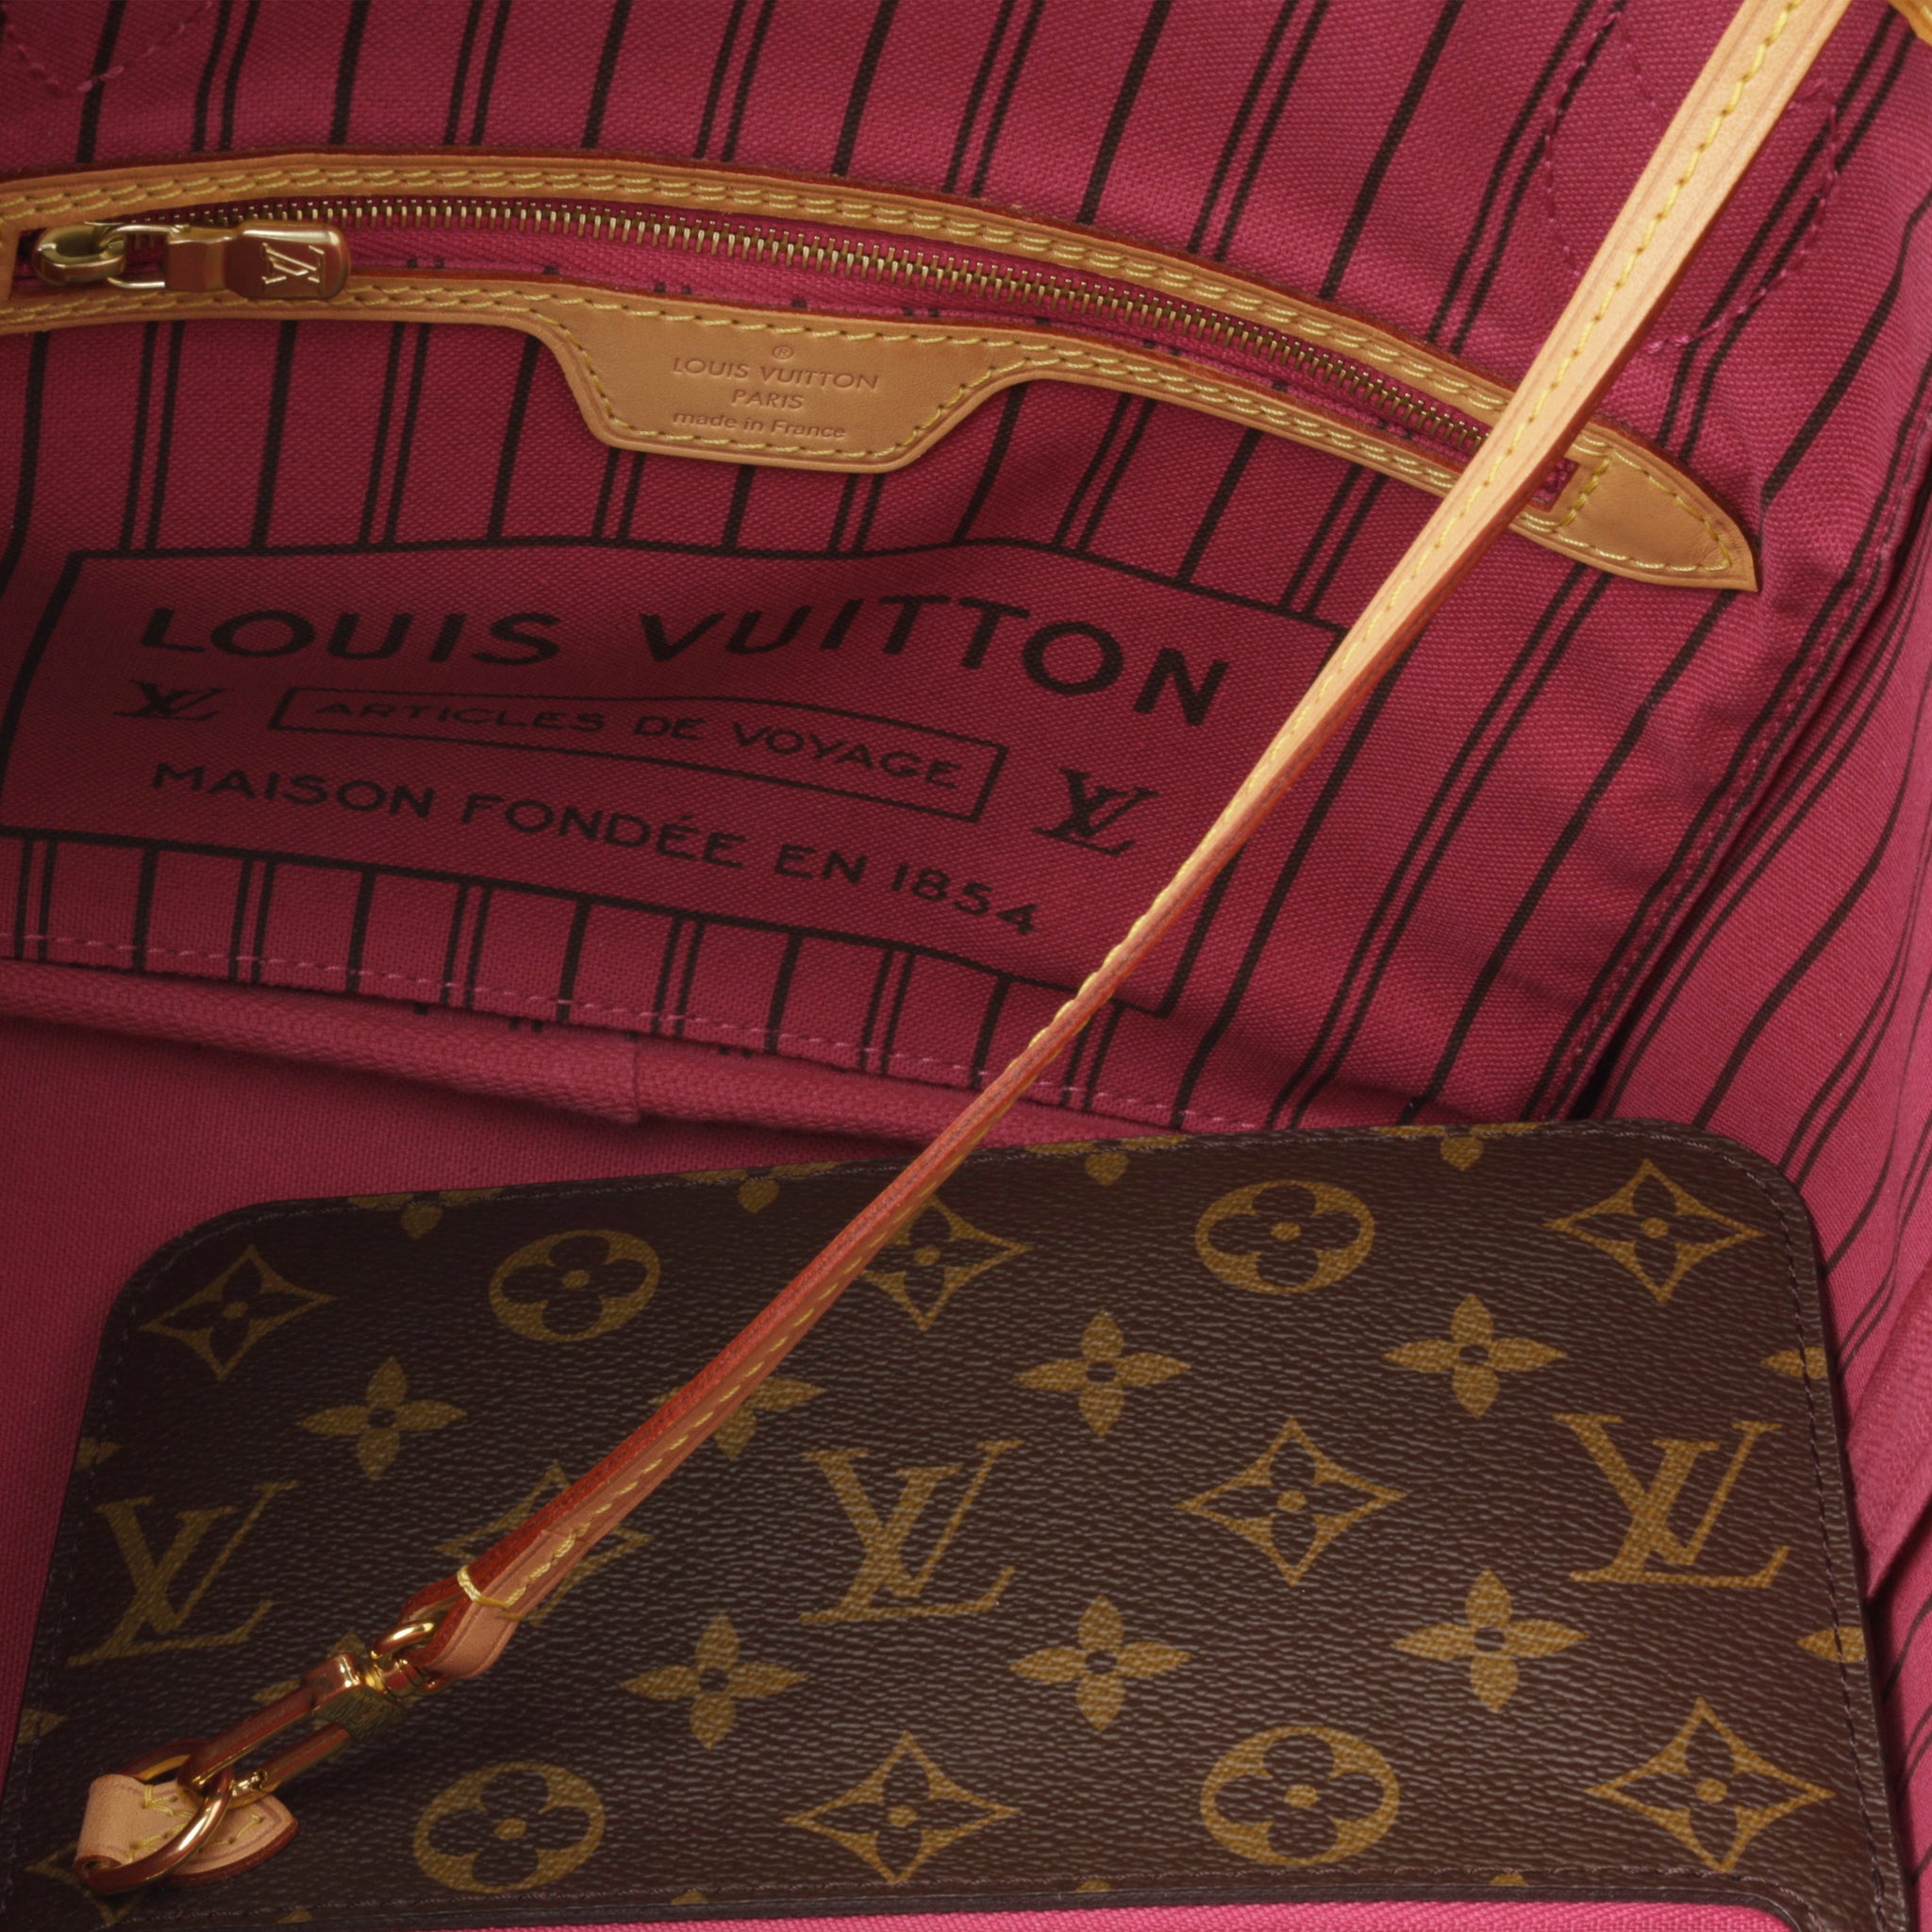 Louis Vuitton, Bags, Louis Vuitton Neverfull Mm Medium No Trades